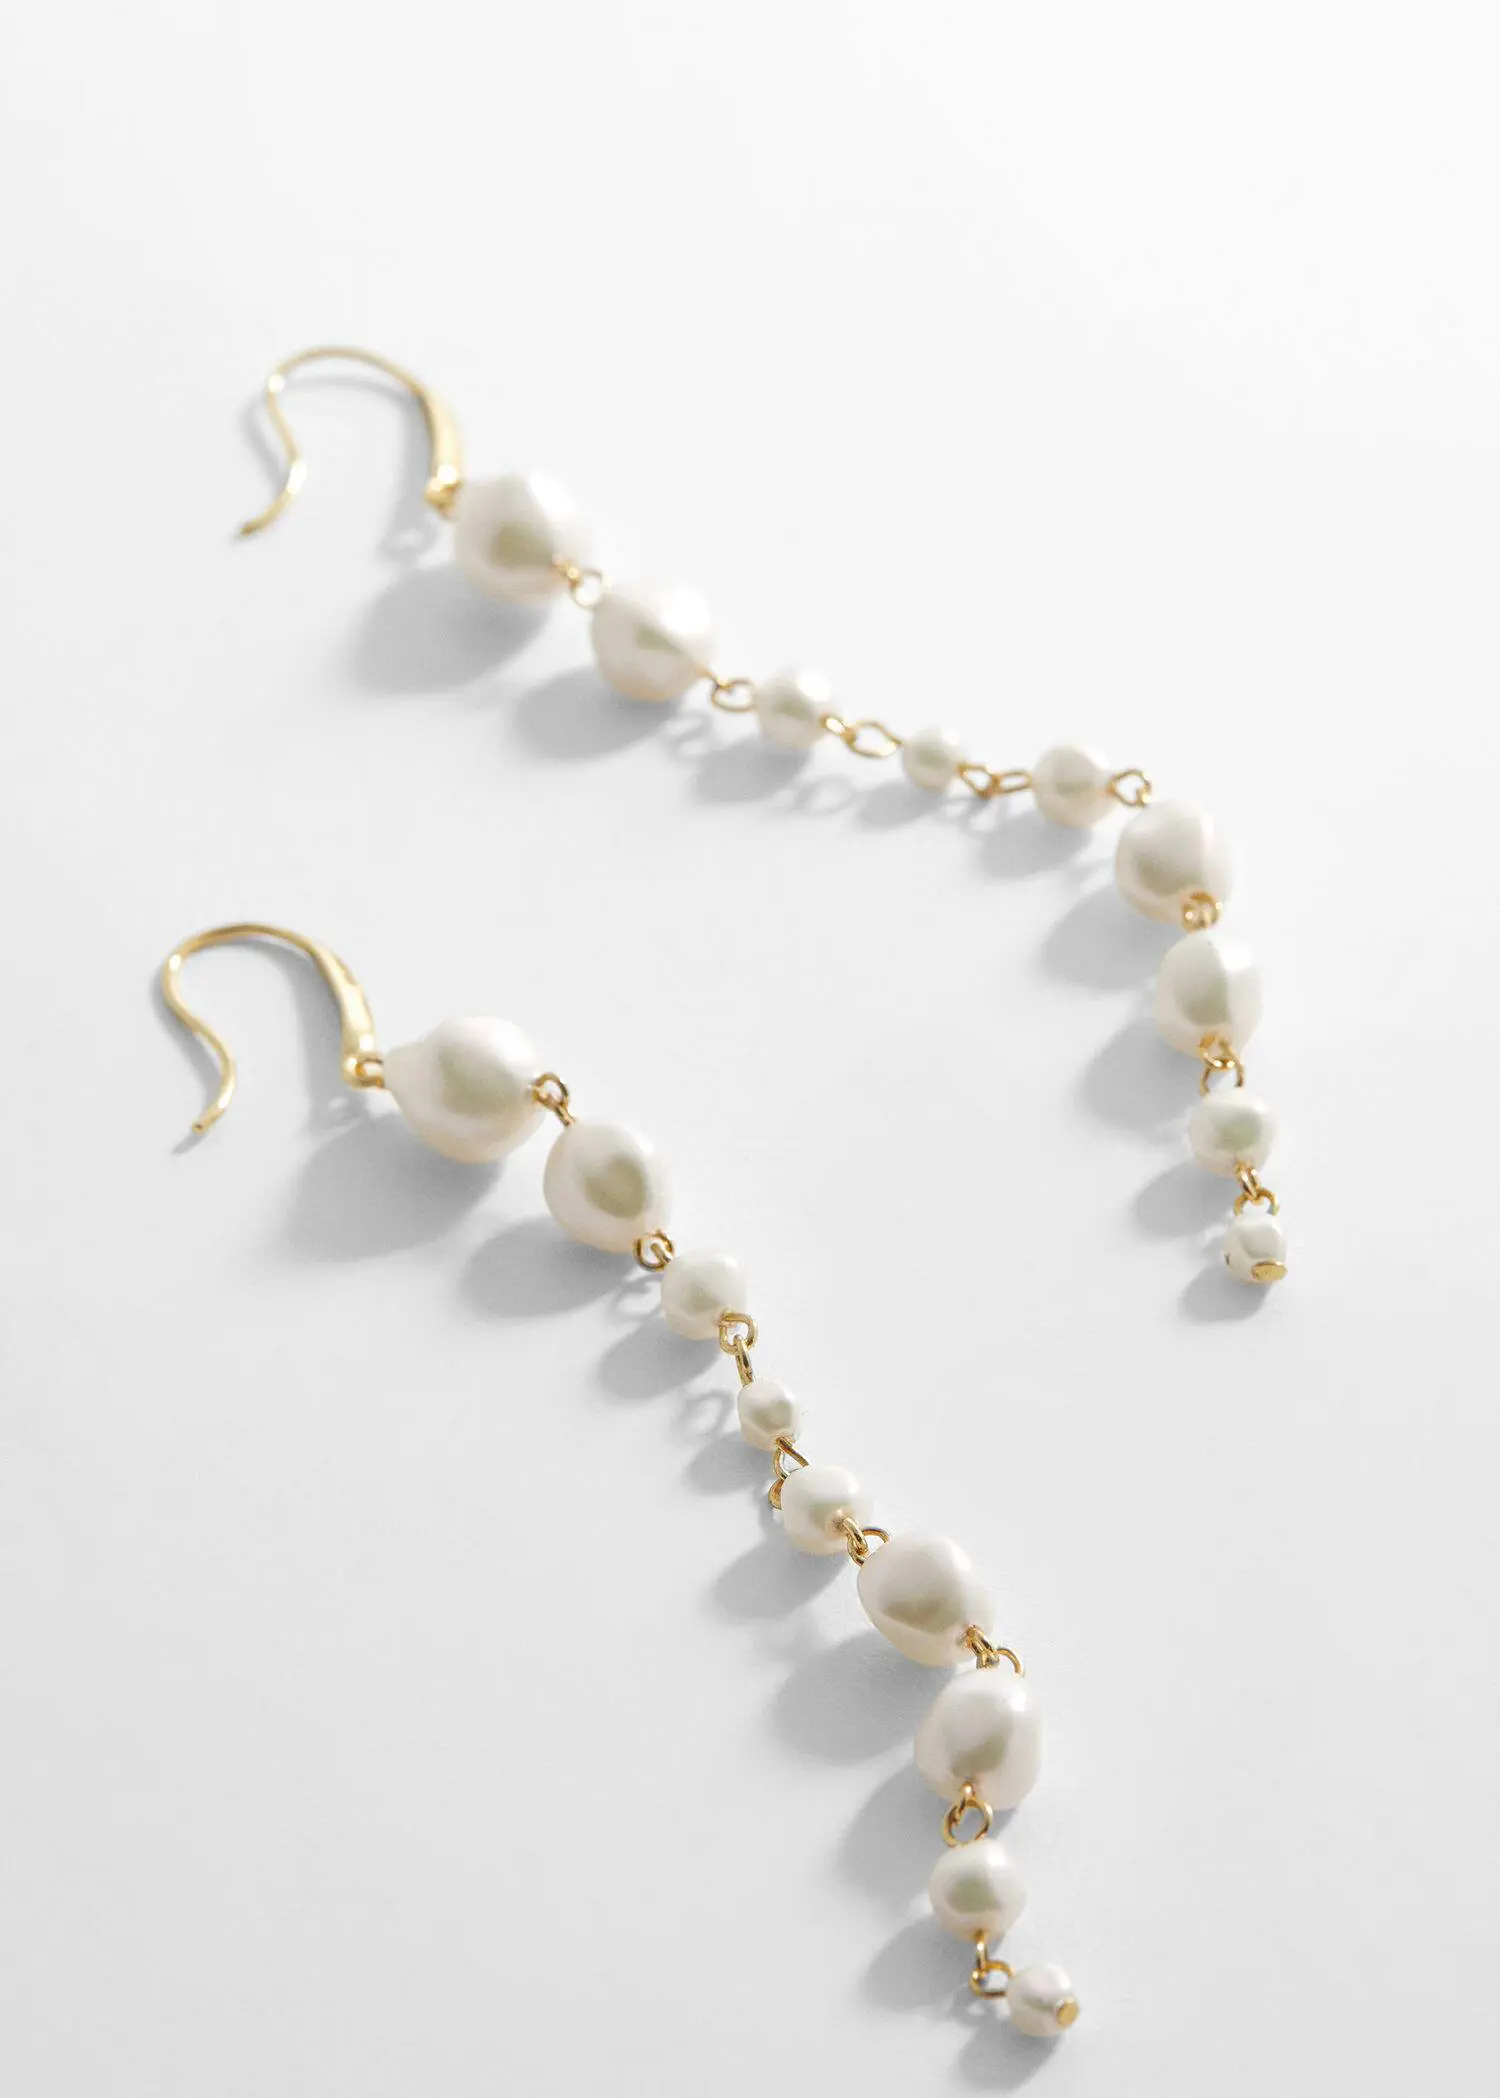 Mango Pearl thread earrings. 1